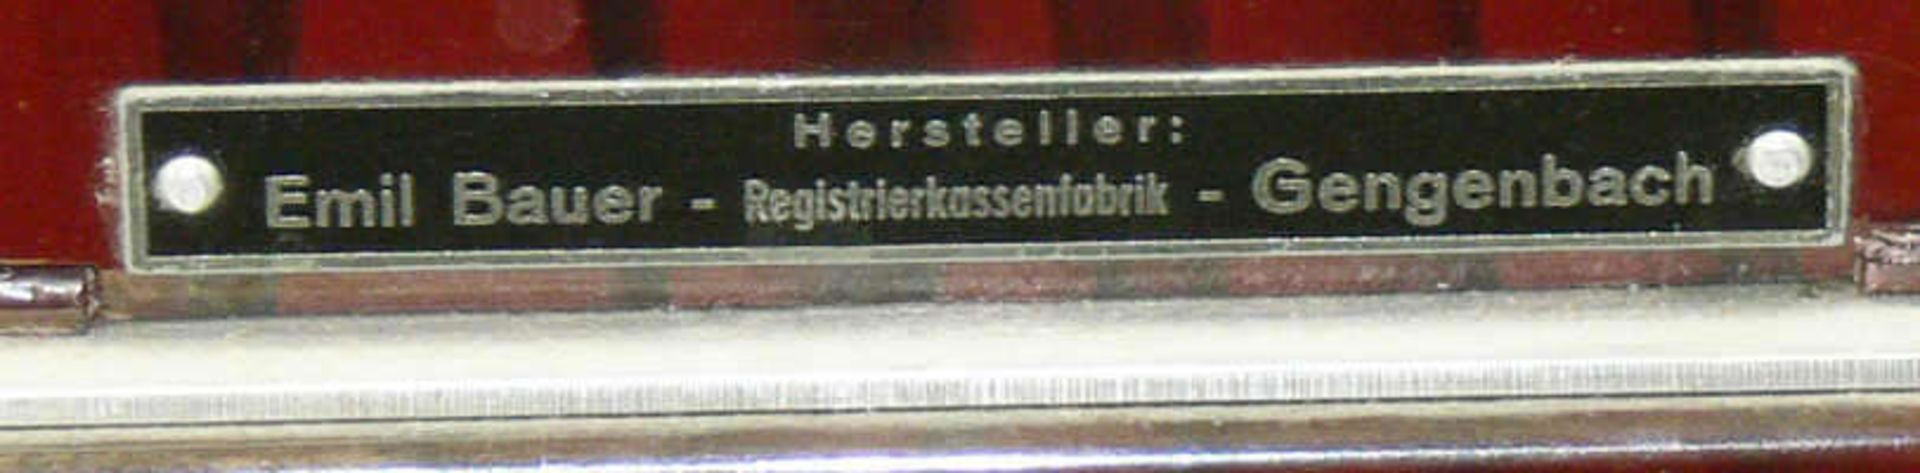 Hannovera Registrierkasse. Hersteller: Emil Bauer Registrierkassenfabrik Gengenbach. Hannovera - Image 4 of 4